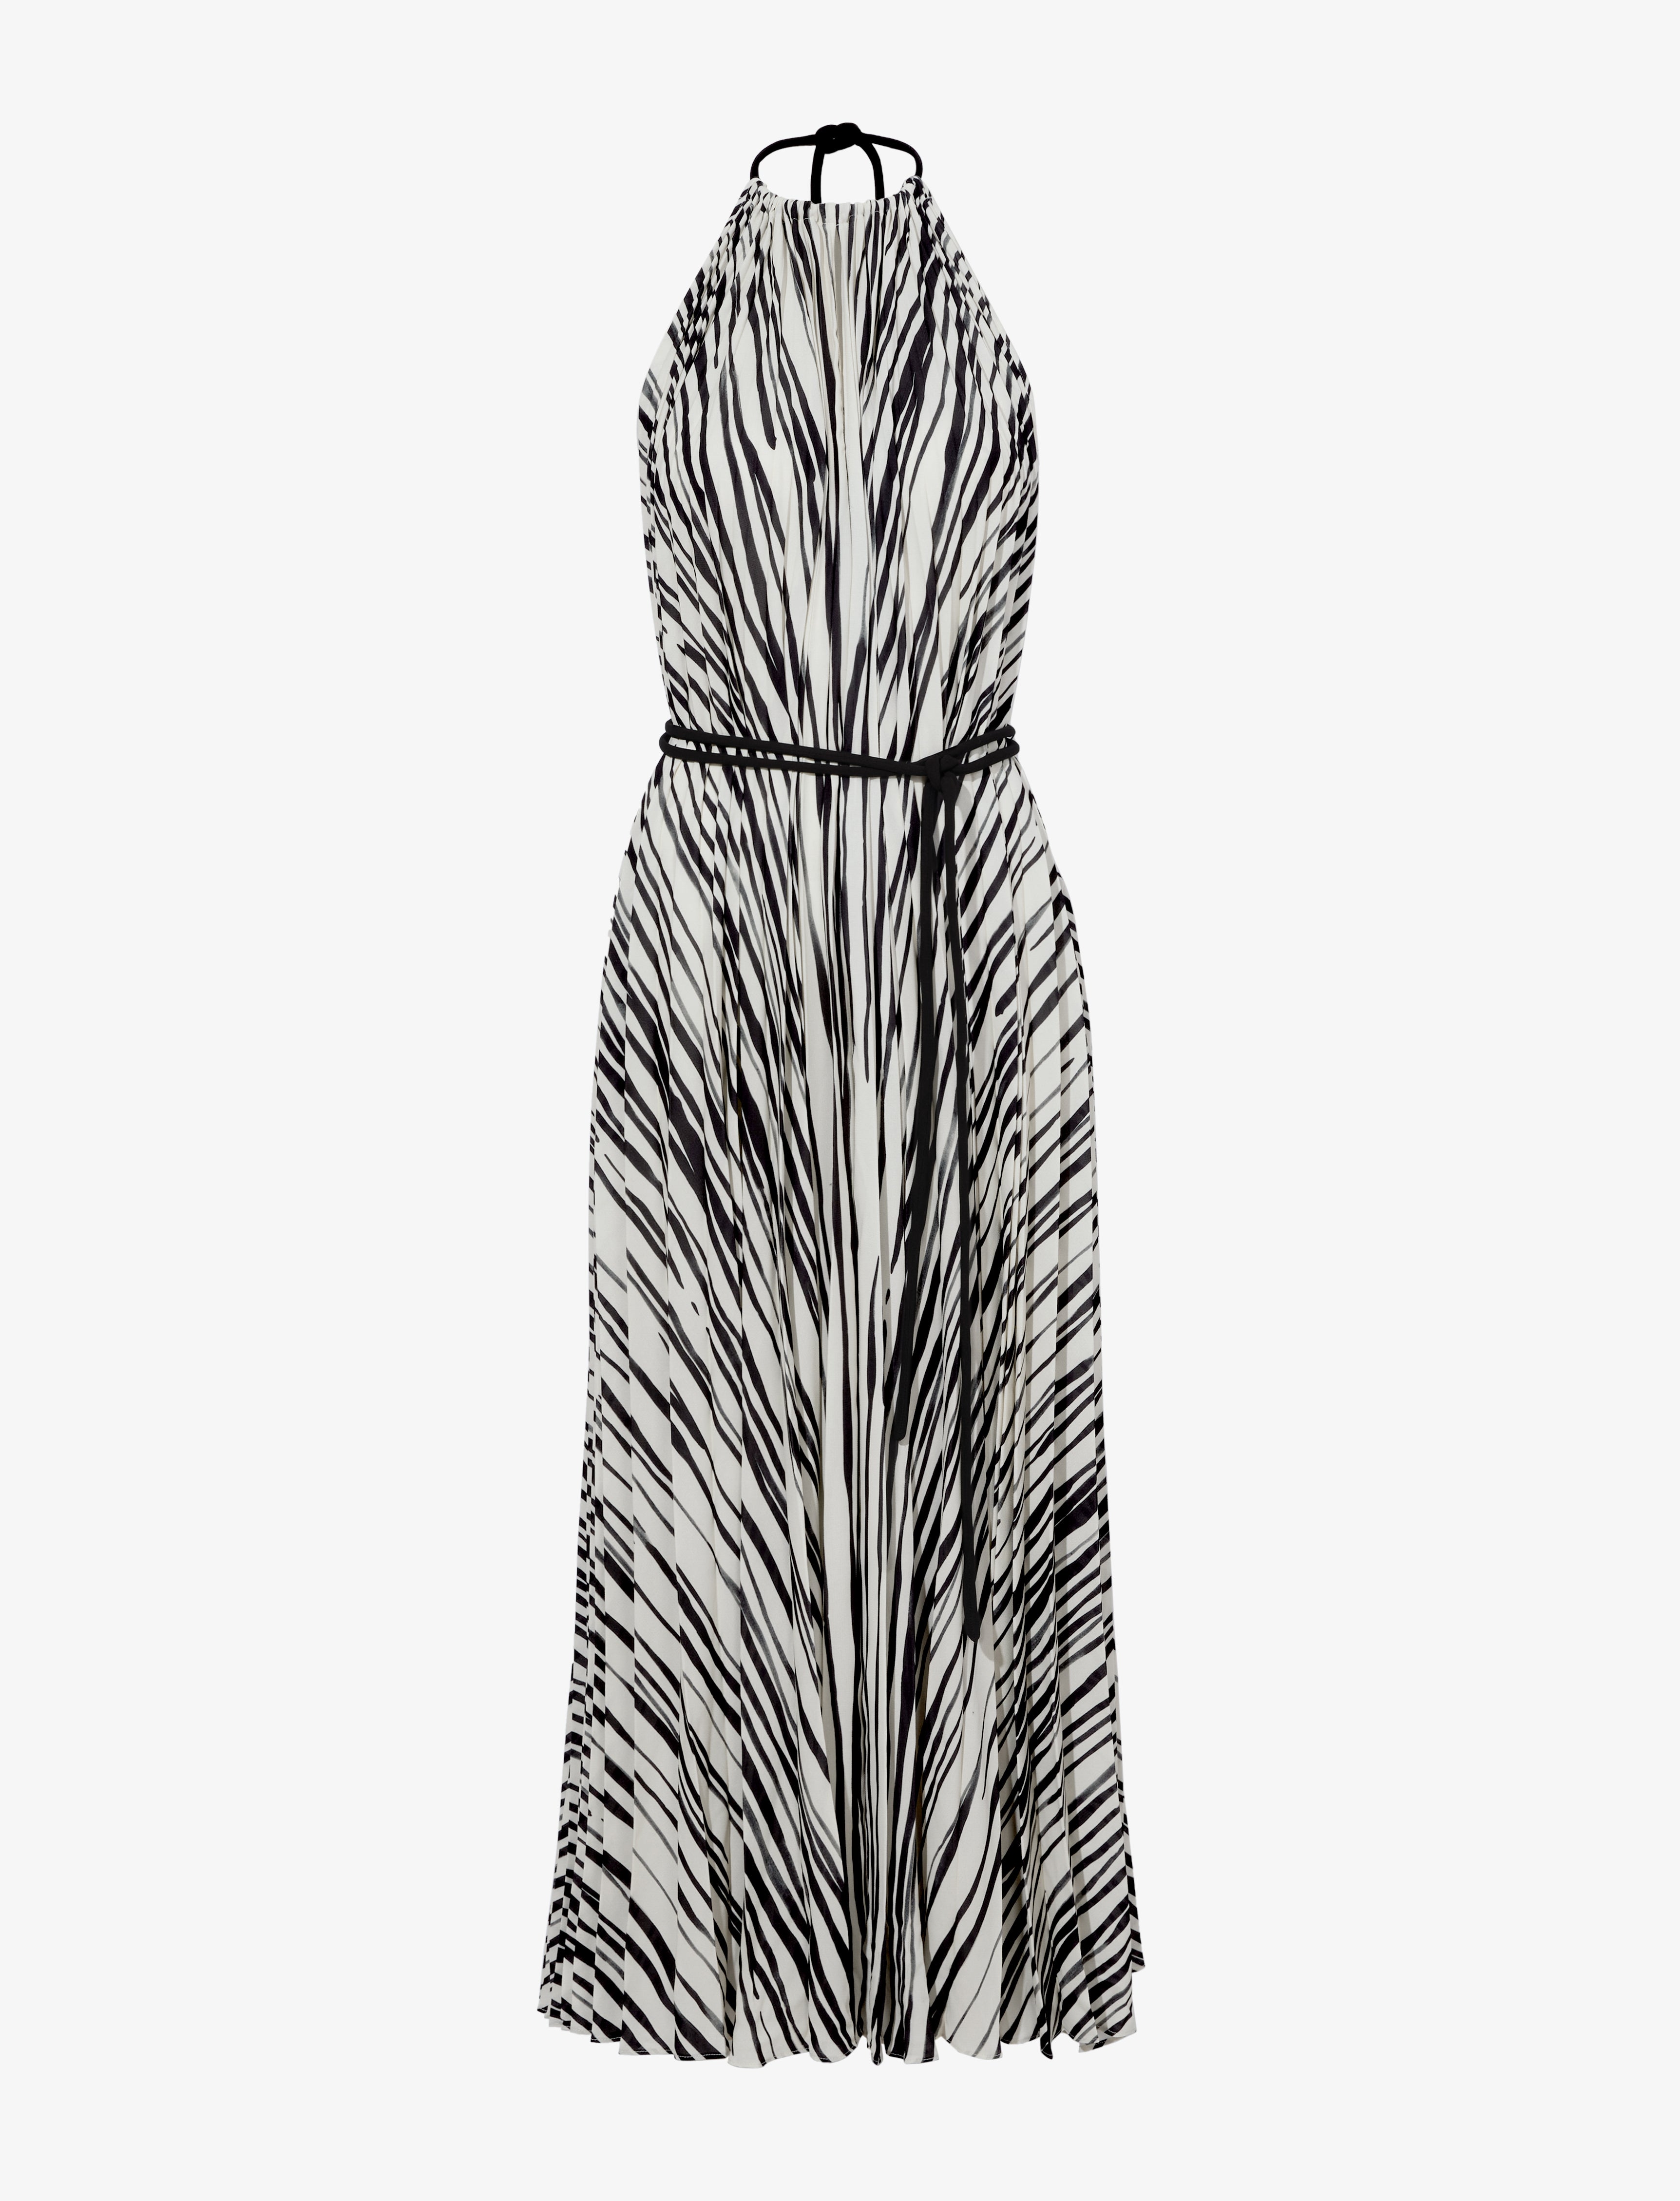 Frida Halter Dress in Printed Sheer Pleated Chiffon – Proenza Schouler